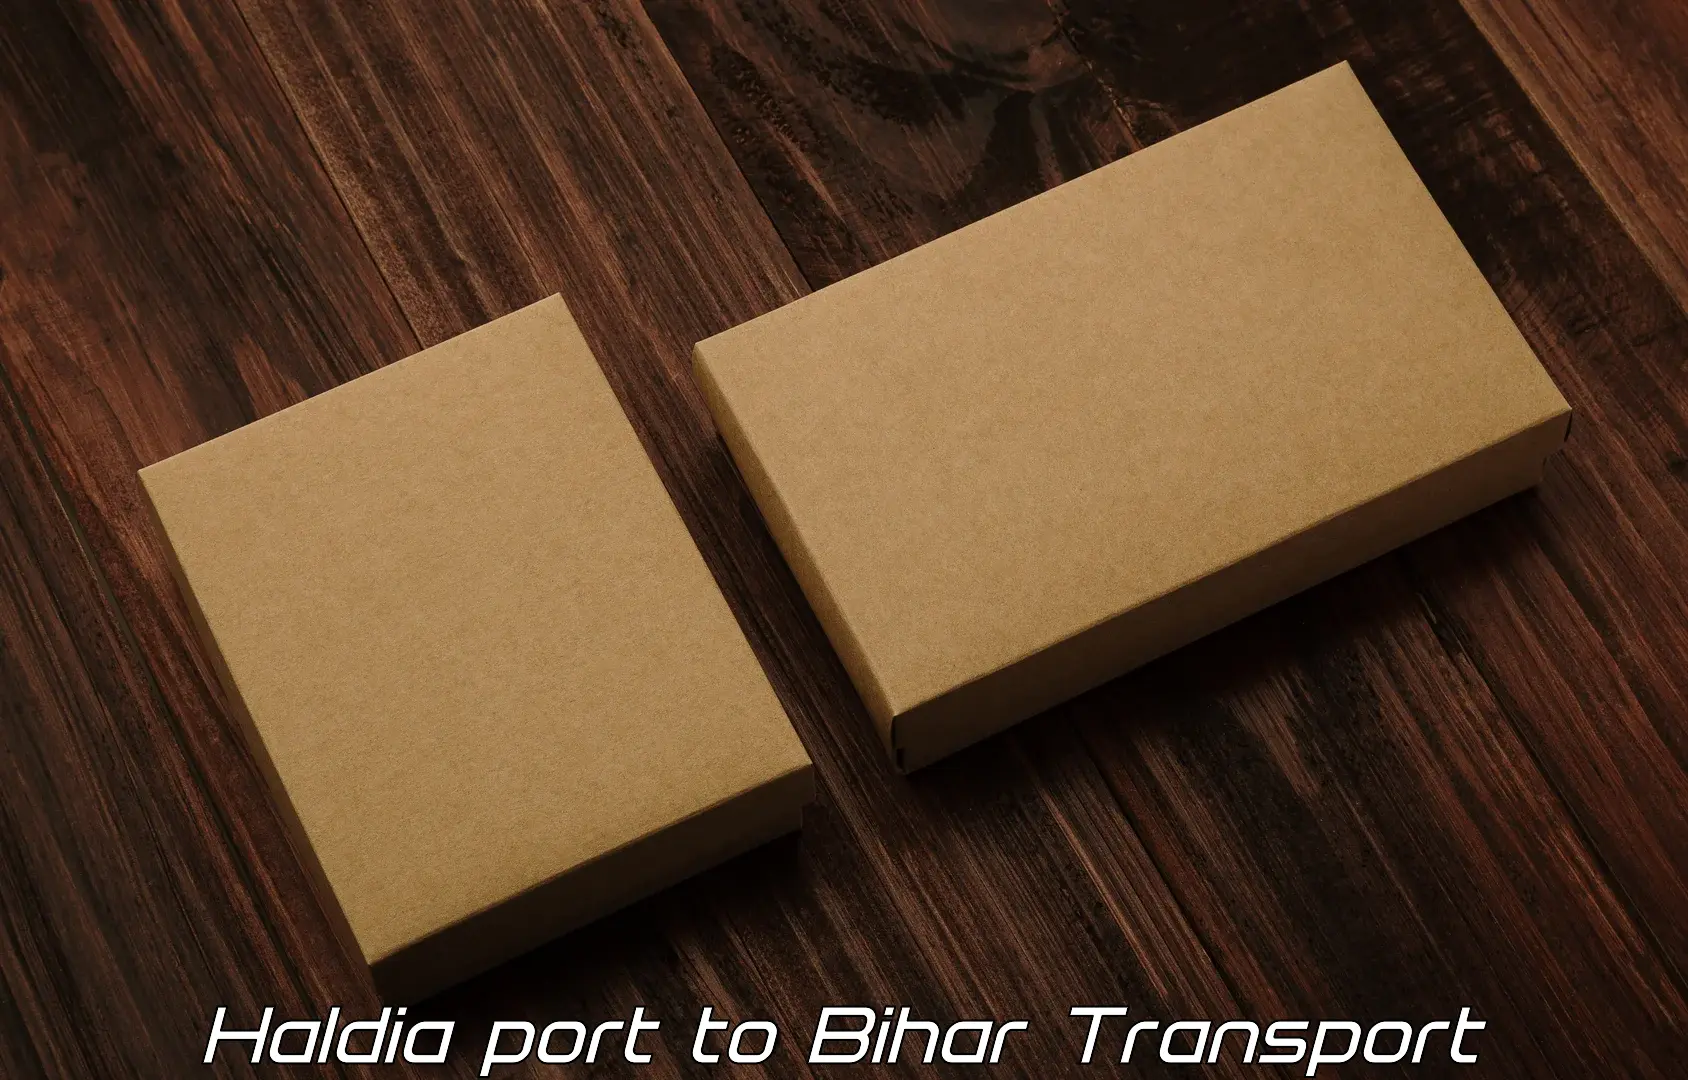 Two wheeler parcel service Haldia port to Munger